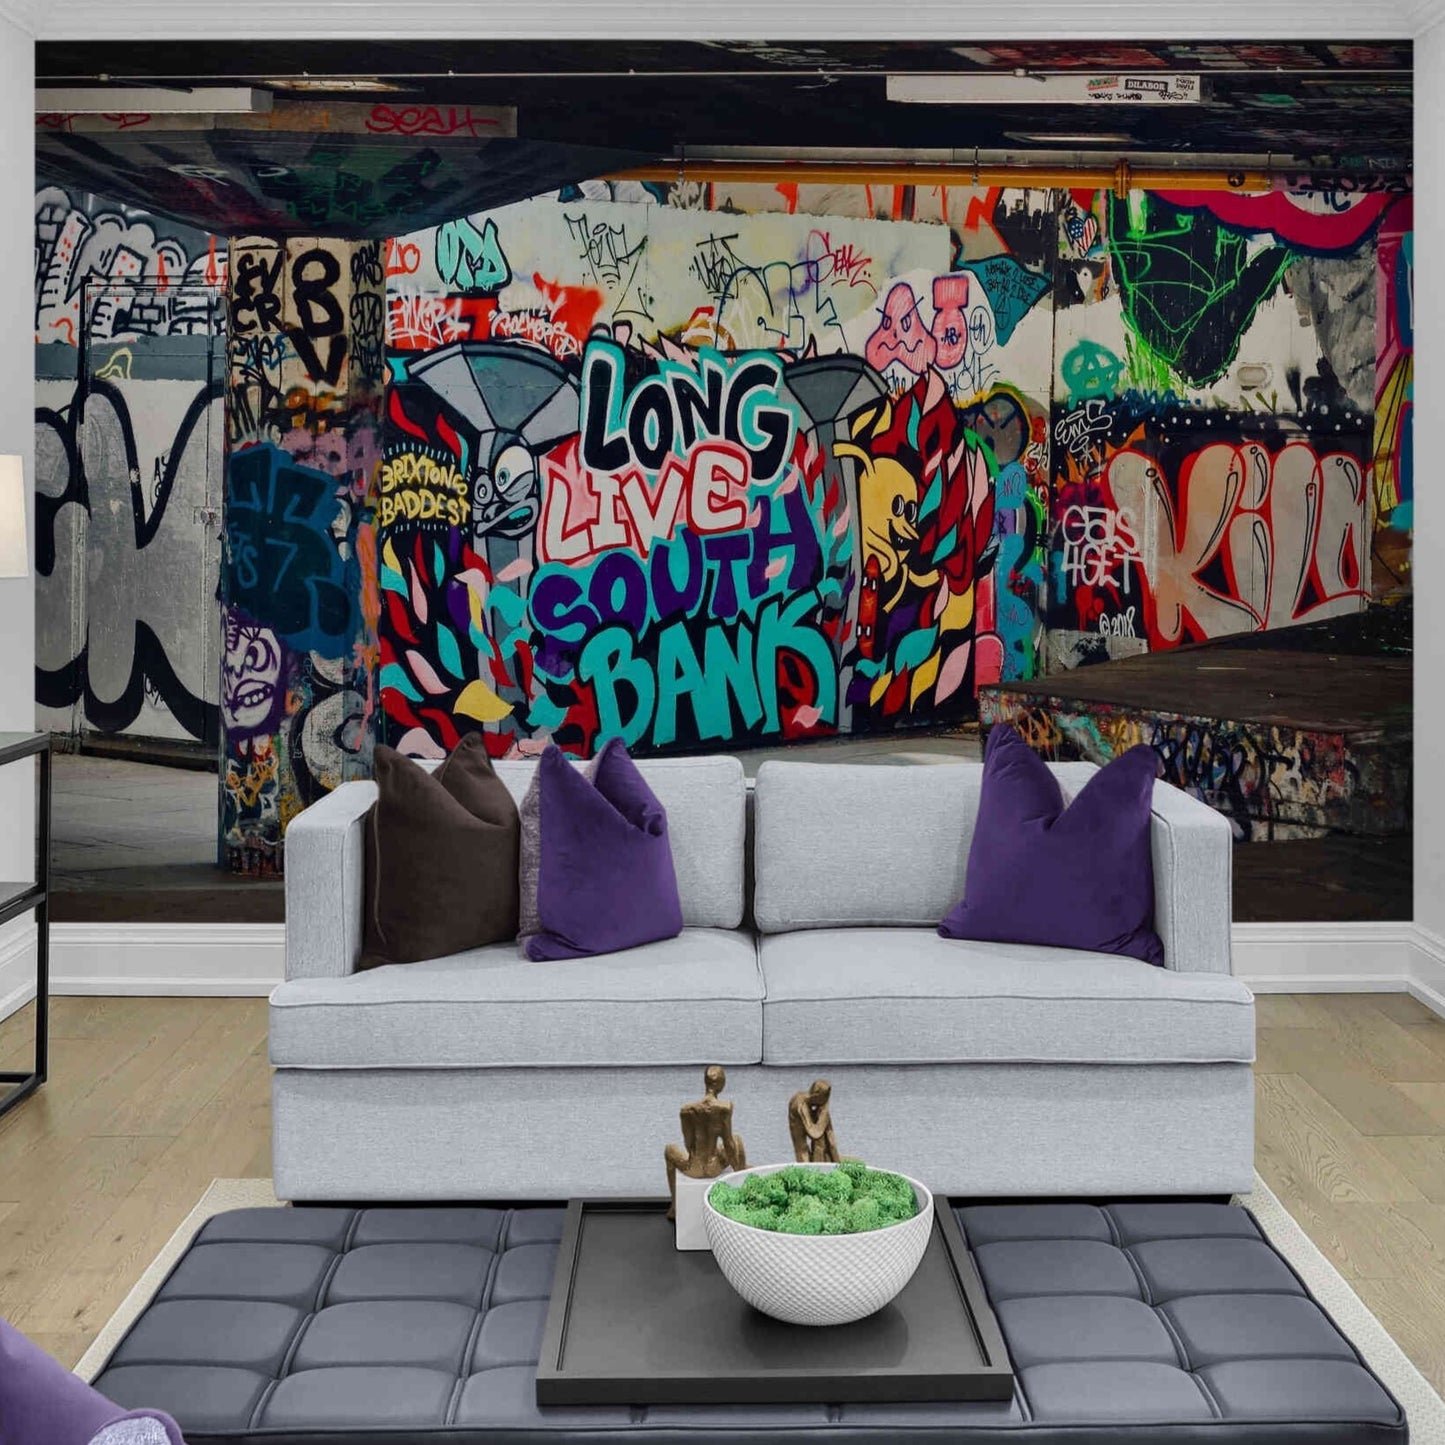 Epic gamer room with vibrant graffiti artwork wallpaper.